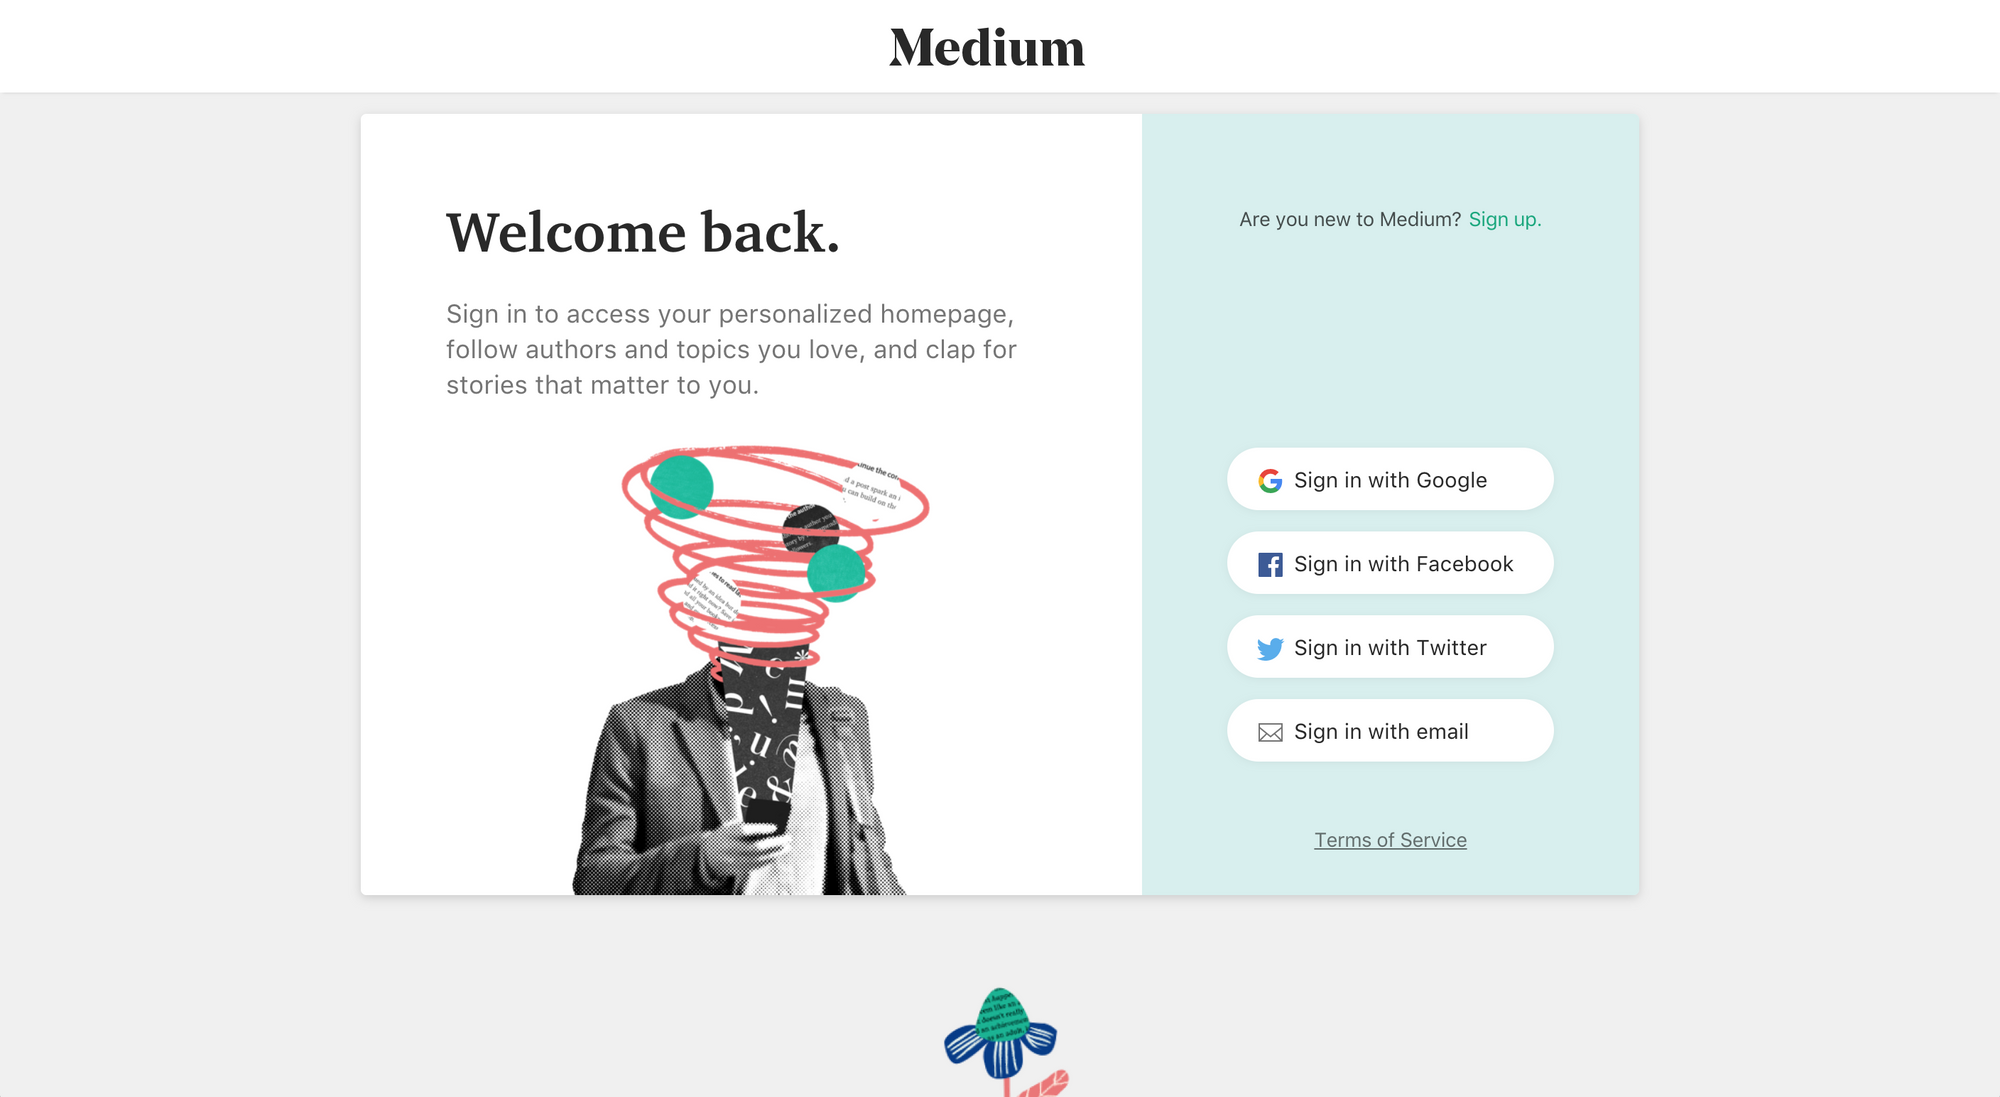 Medium's login page